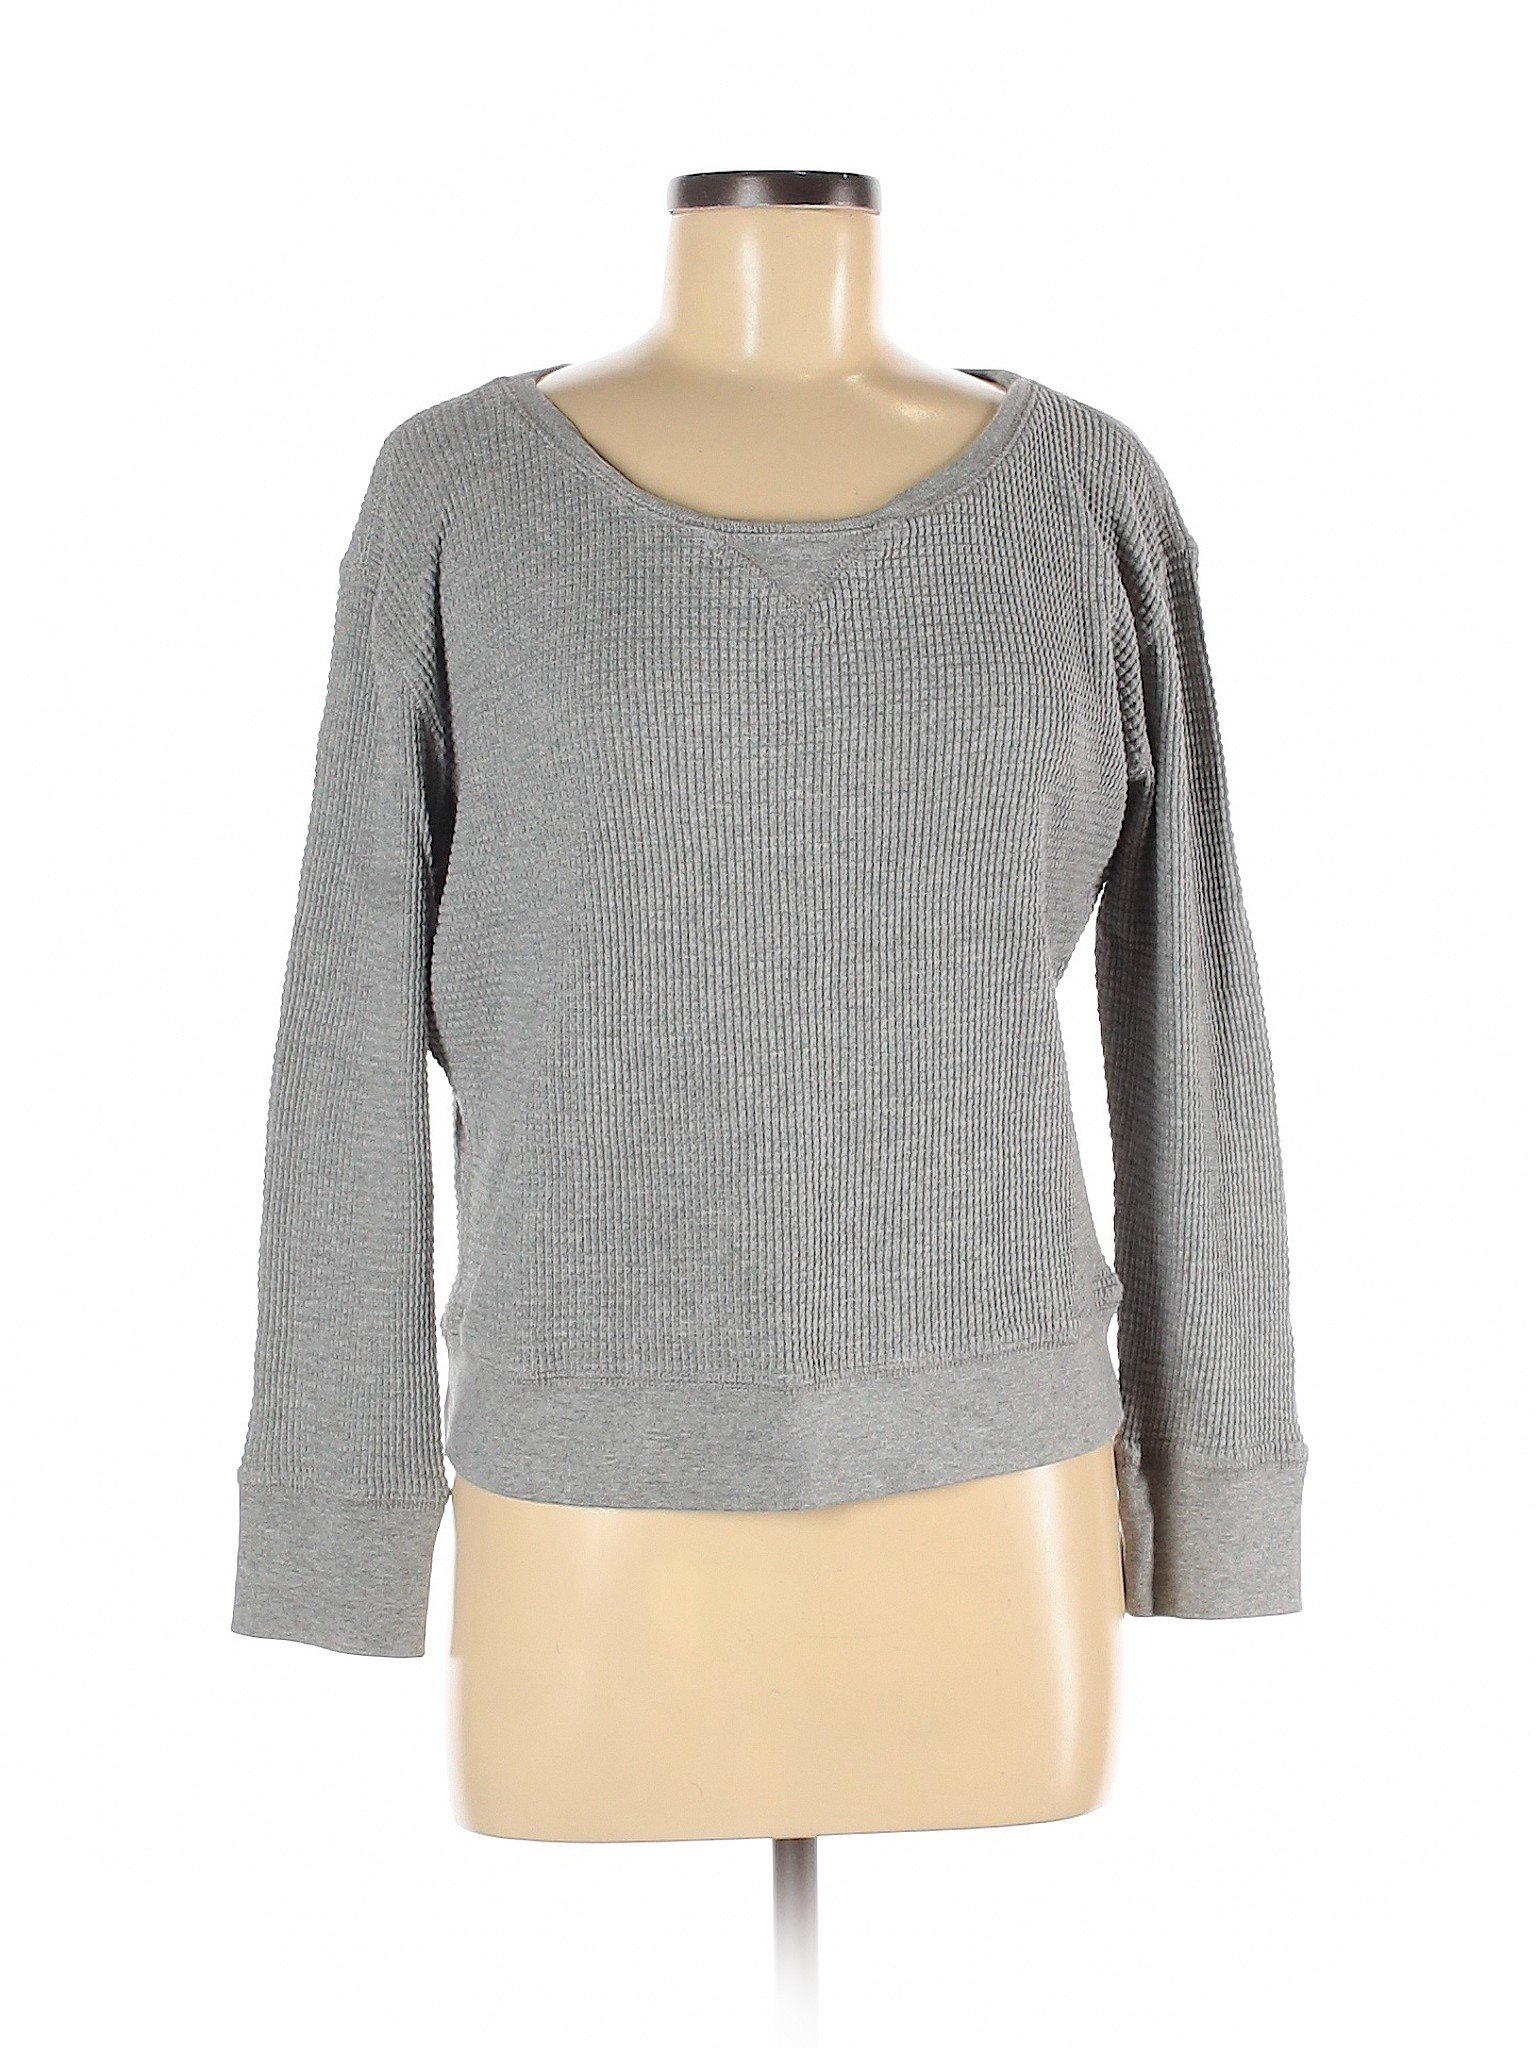 J.Crew Women Gray Pullover Sweater M | eBay